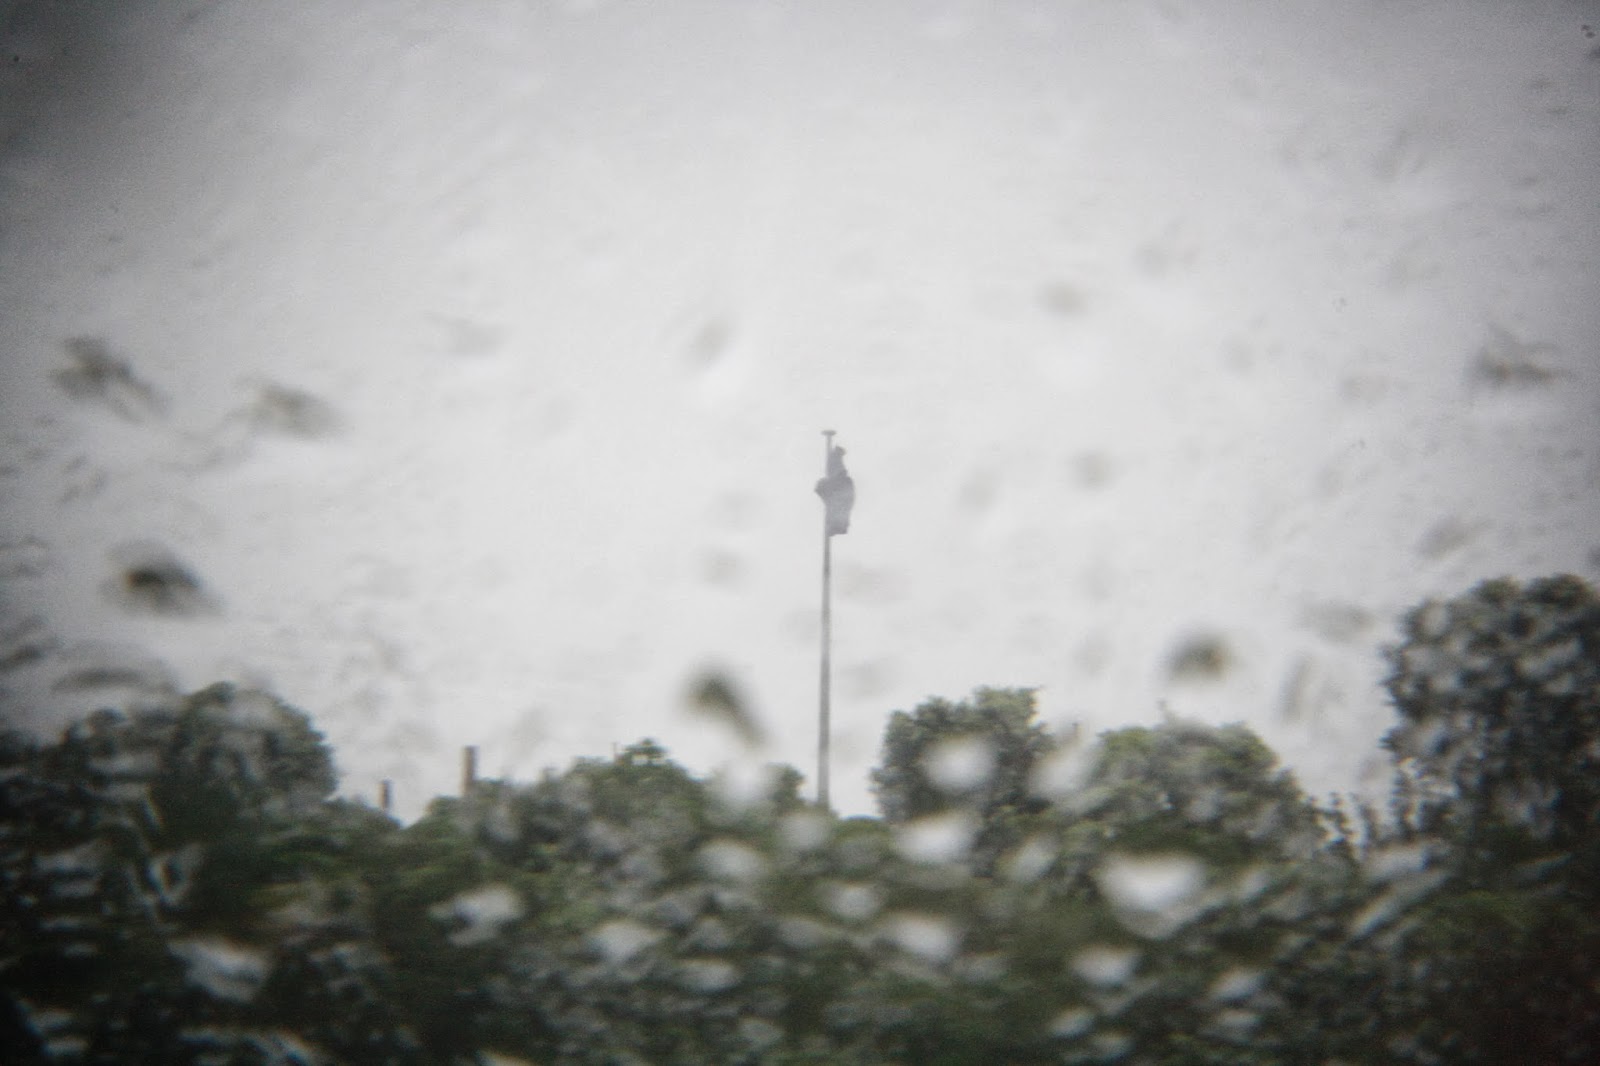 Rain on a car window.